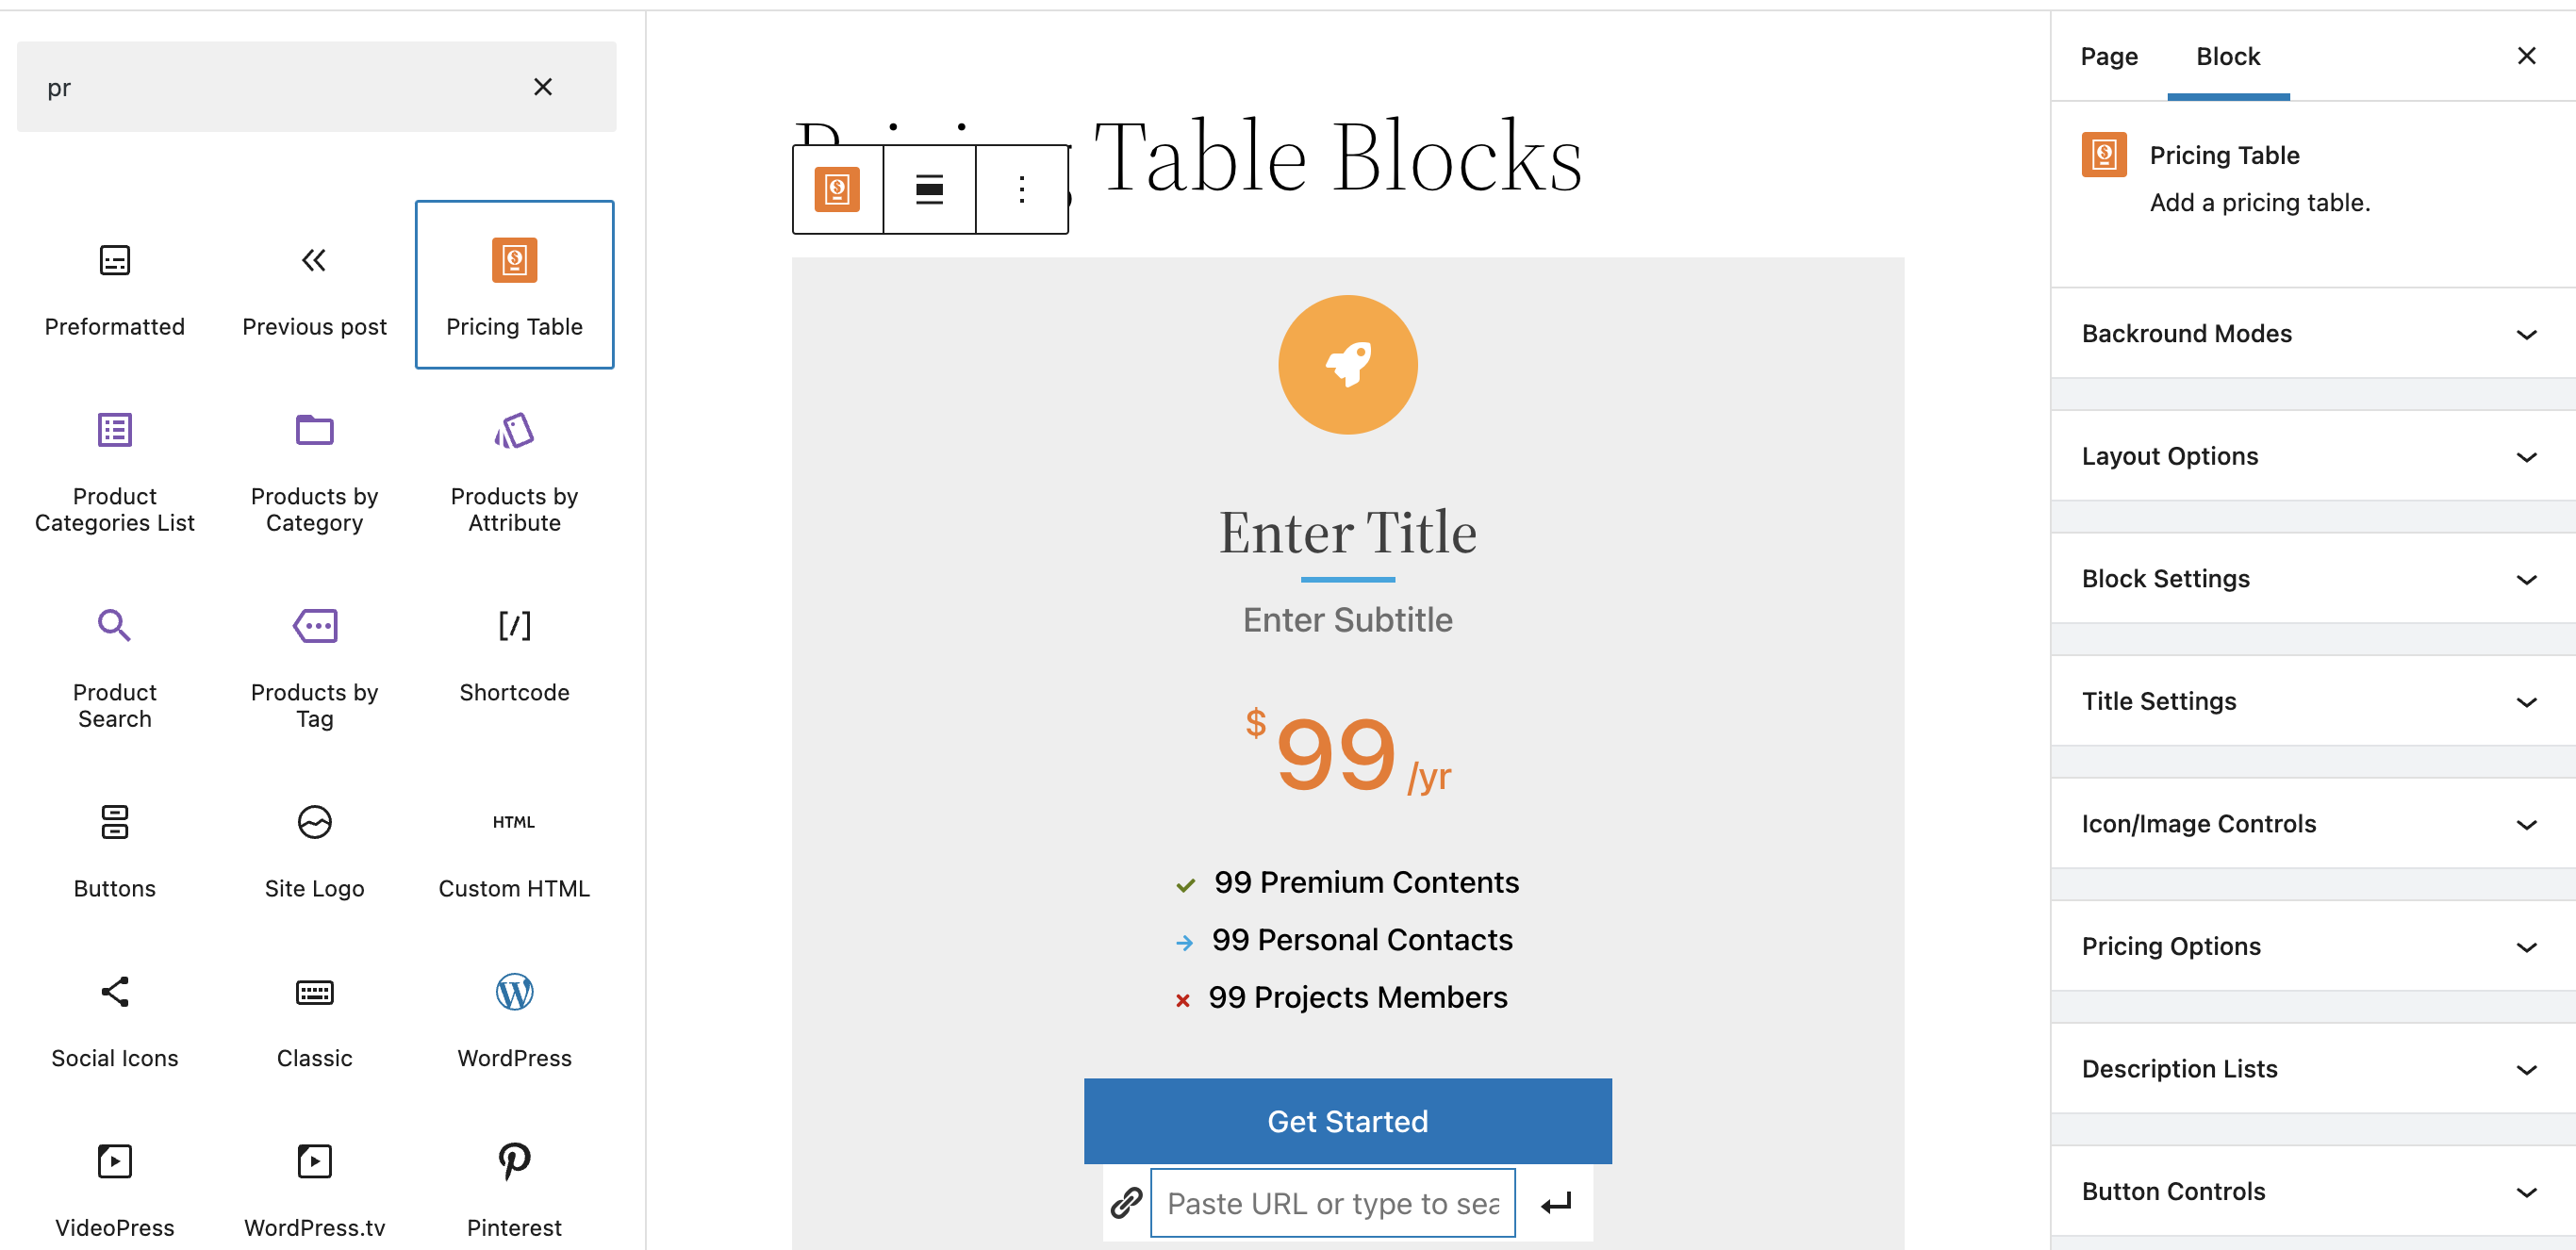 Pricing Table Block - Image Box Controls